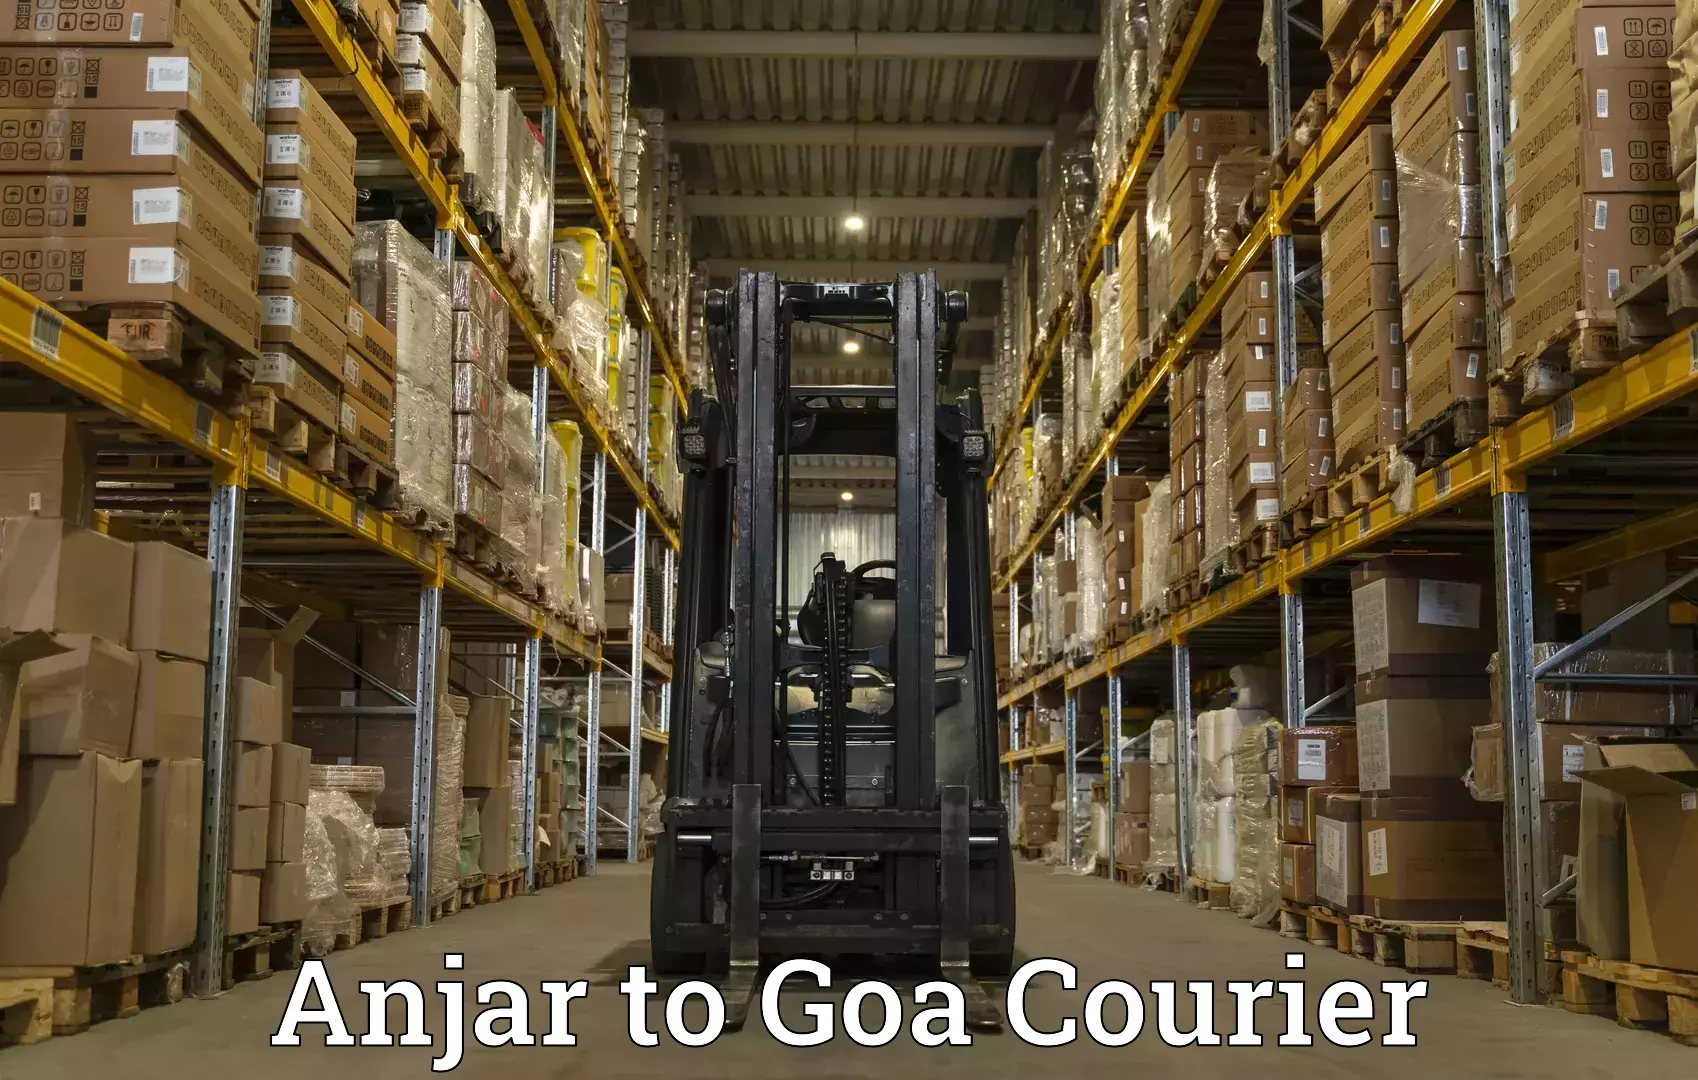 Express delivery capabilities Anjar to Panaji